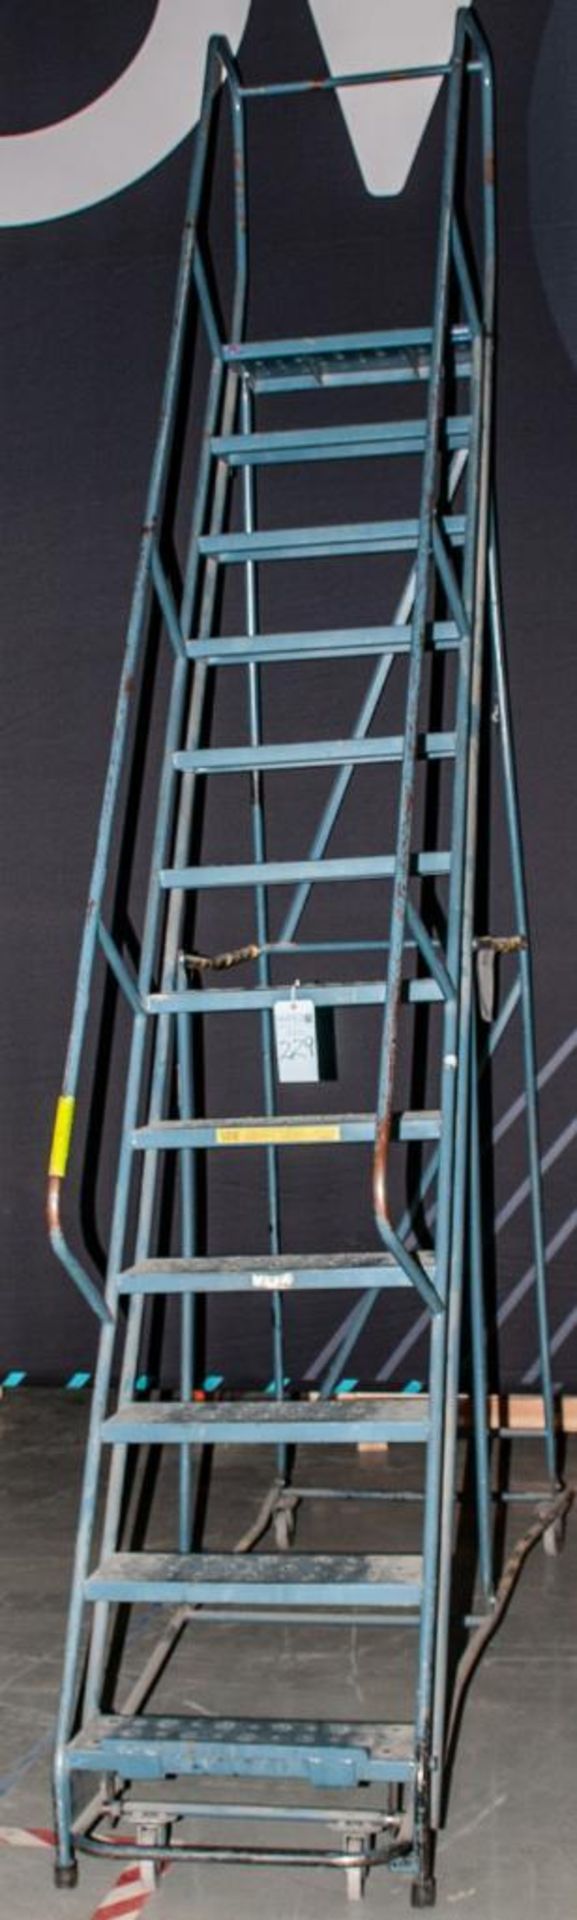 12' Steel Stock Ladder